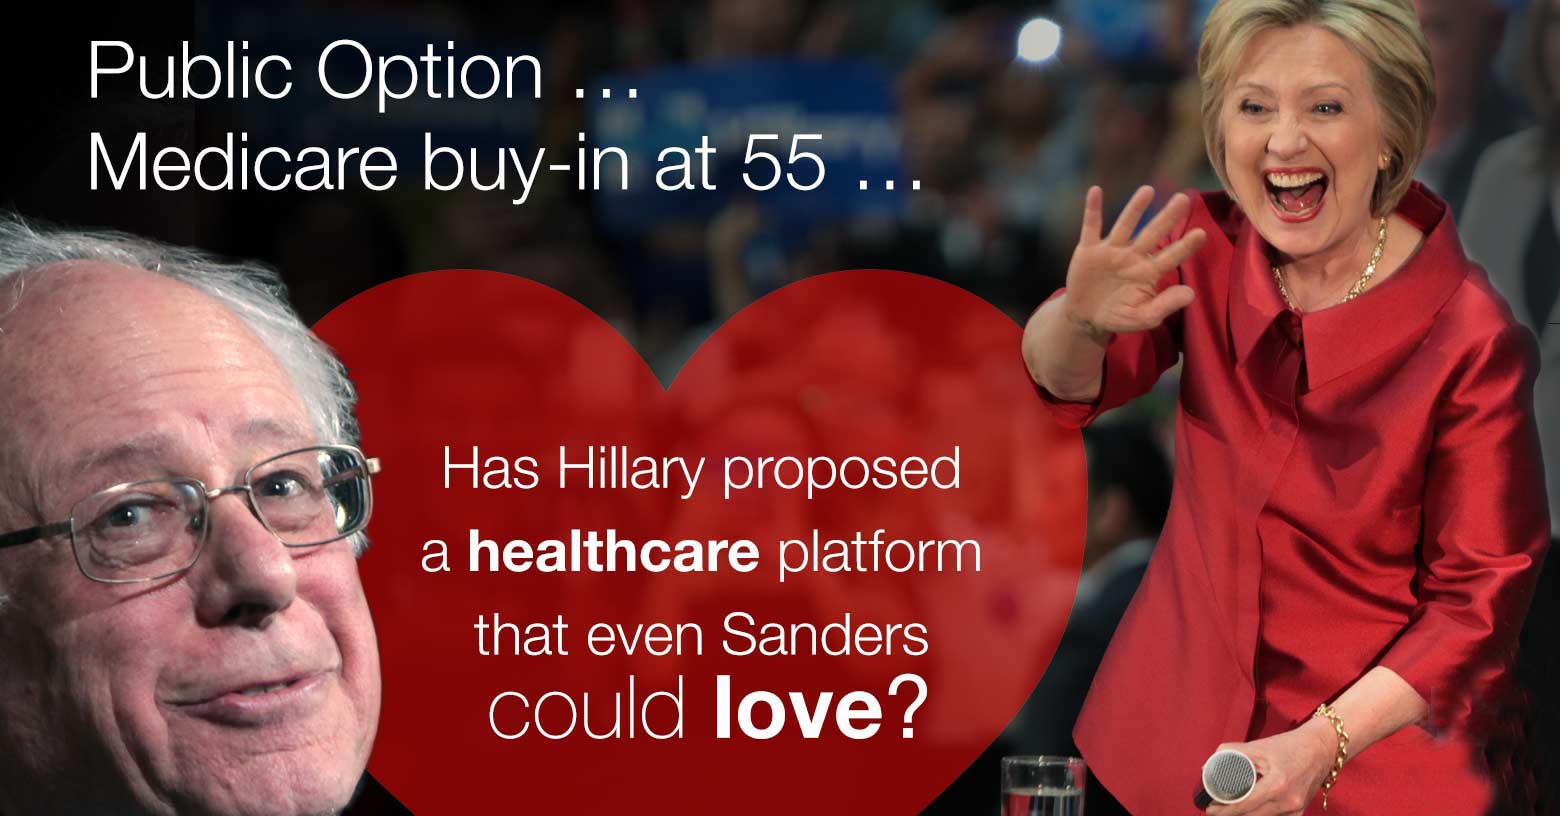 Could Bernie love Hillarycare?